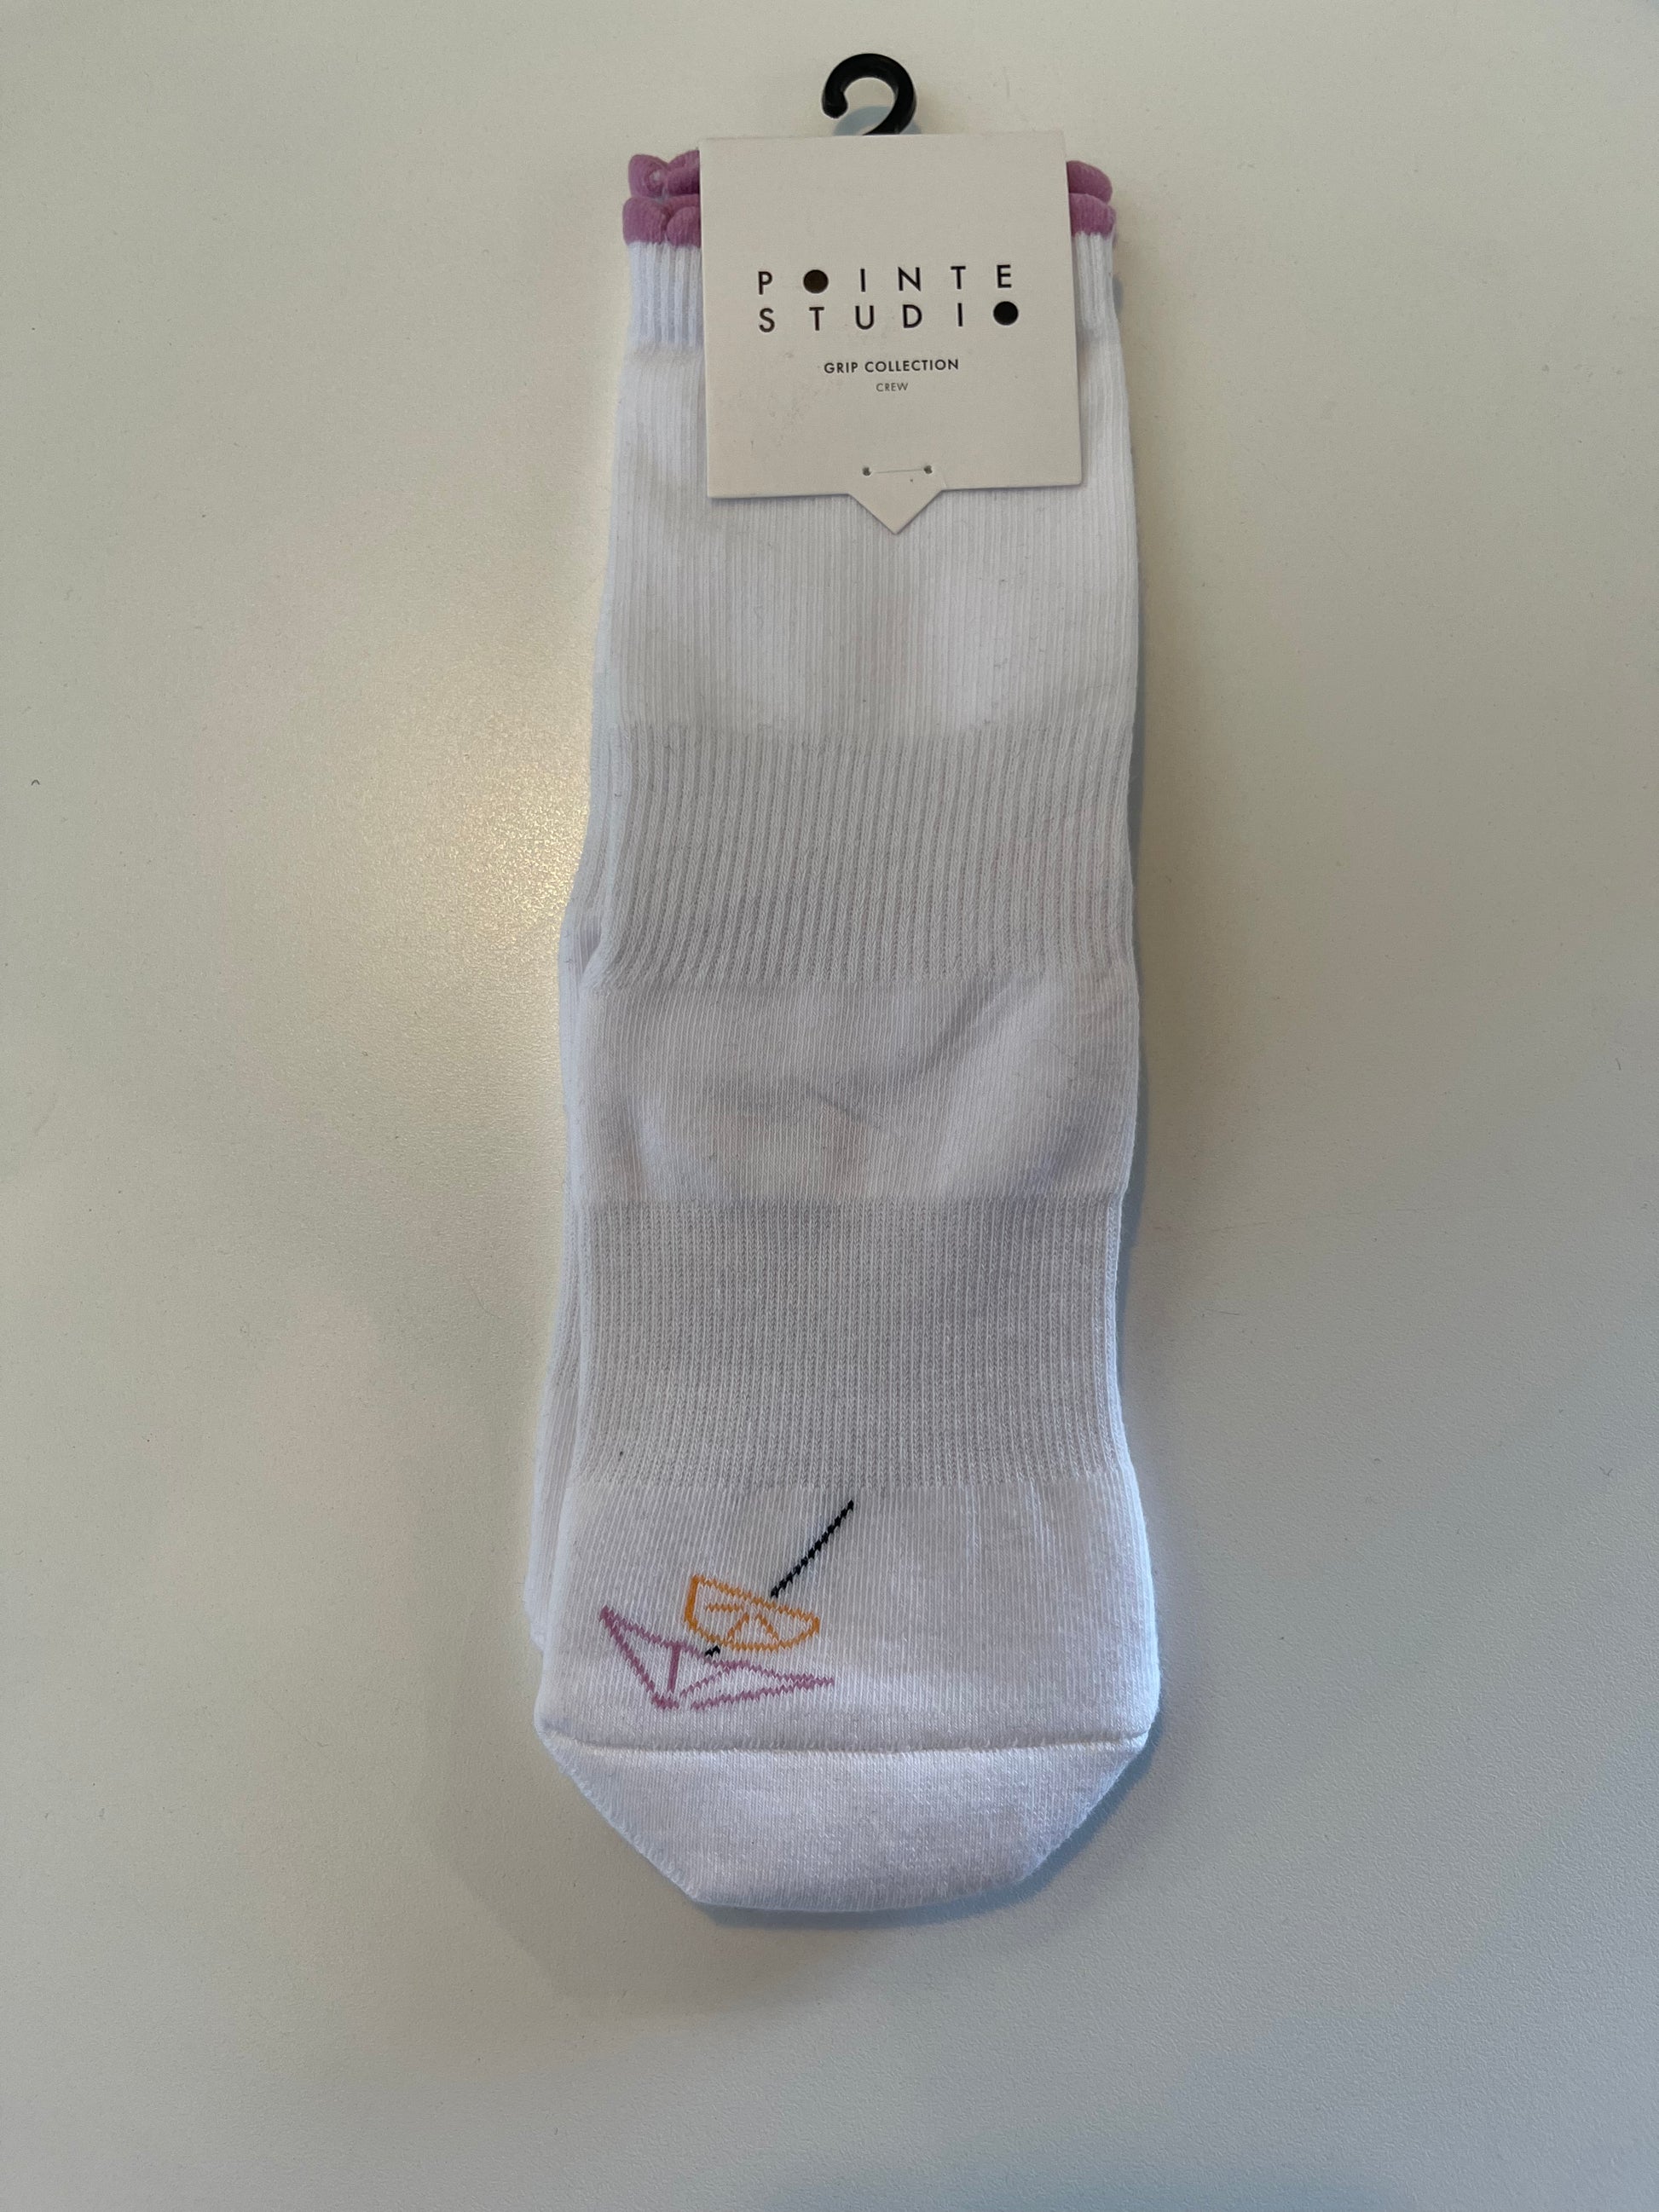 Pure Barre Grip Socks – Pure Barre - Anaheim Hills & Brea